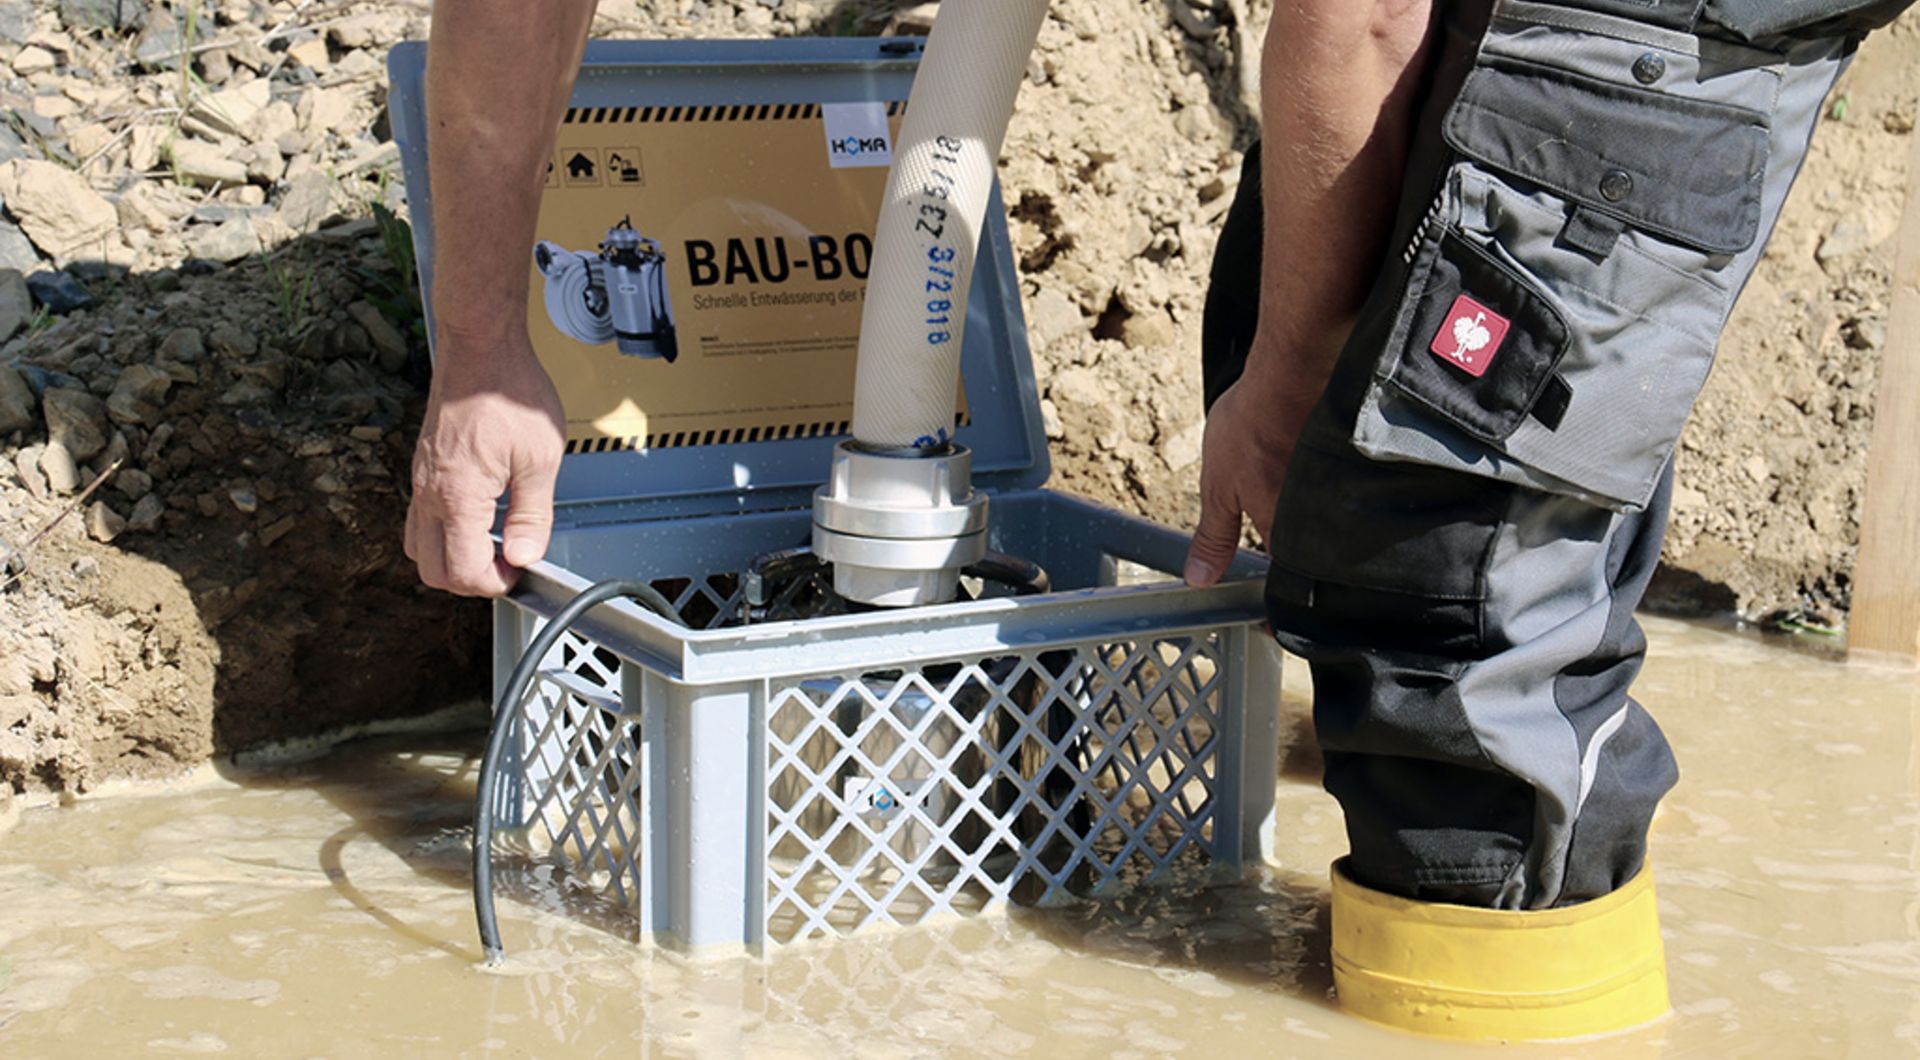 Homa Baubox Baustellenpumpe für Baugruben Flutset